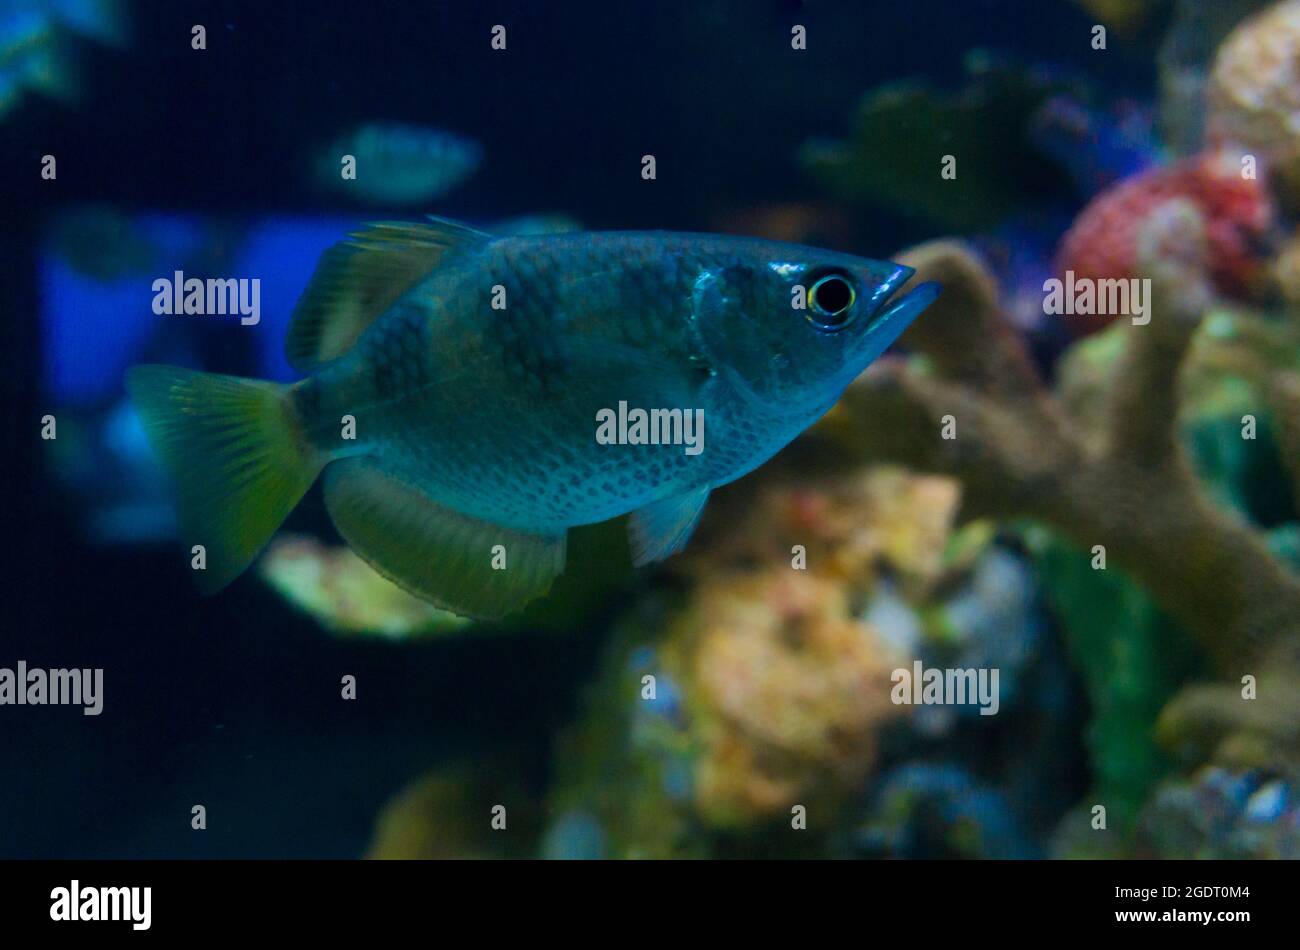 Saltwater fish in an aquarium Stock Photo